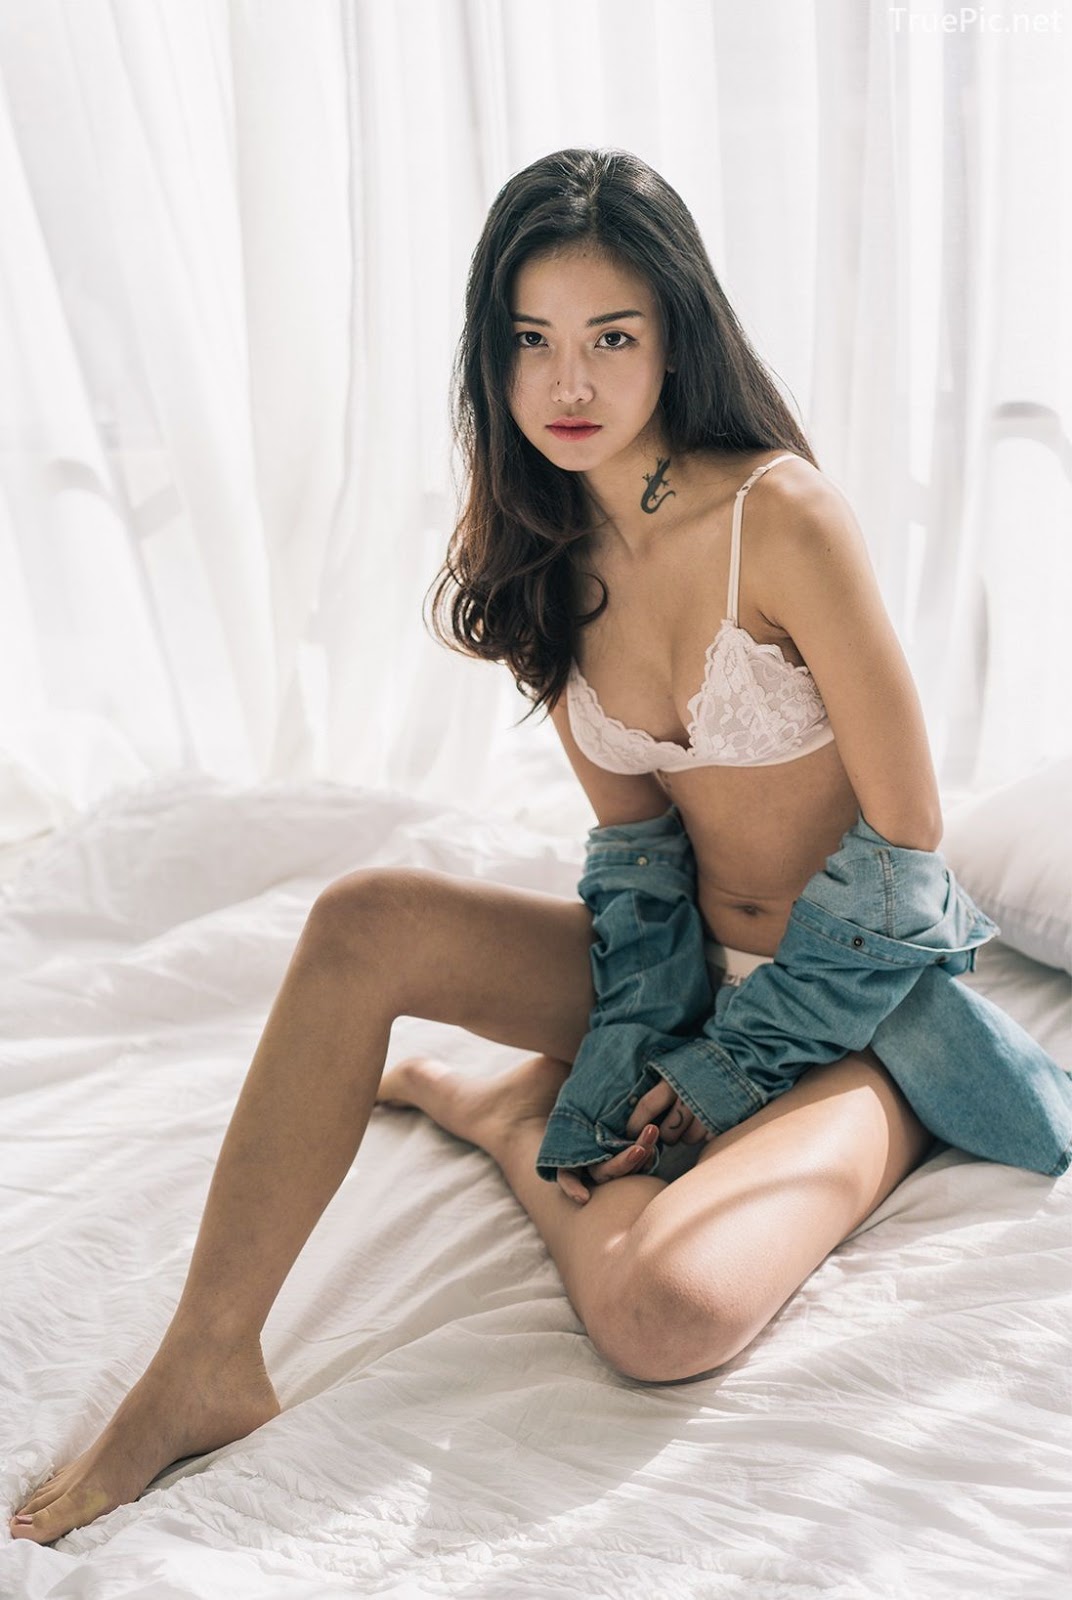 Baek-Ye-Jin-model-hot-images-Back-and-White-lingerie-set-TruePic.net- Picture-12